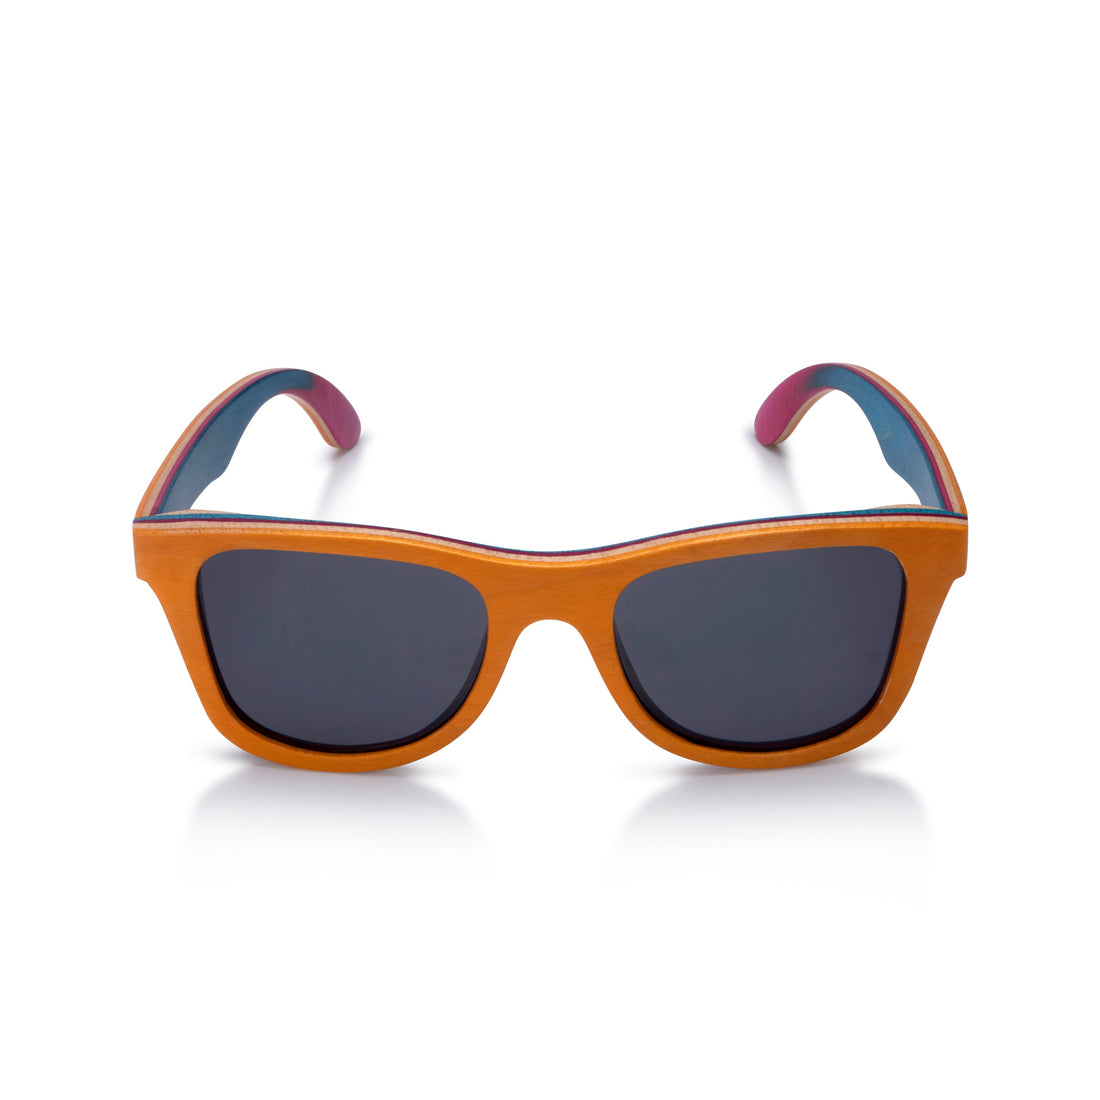 Aimbot Wooden Sunglasses